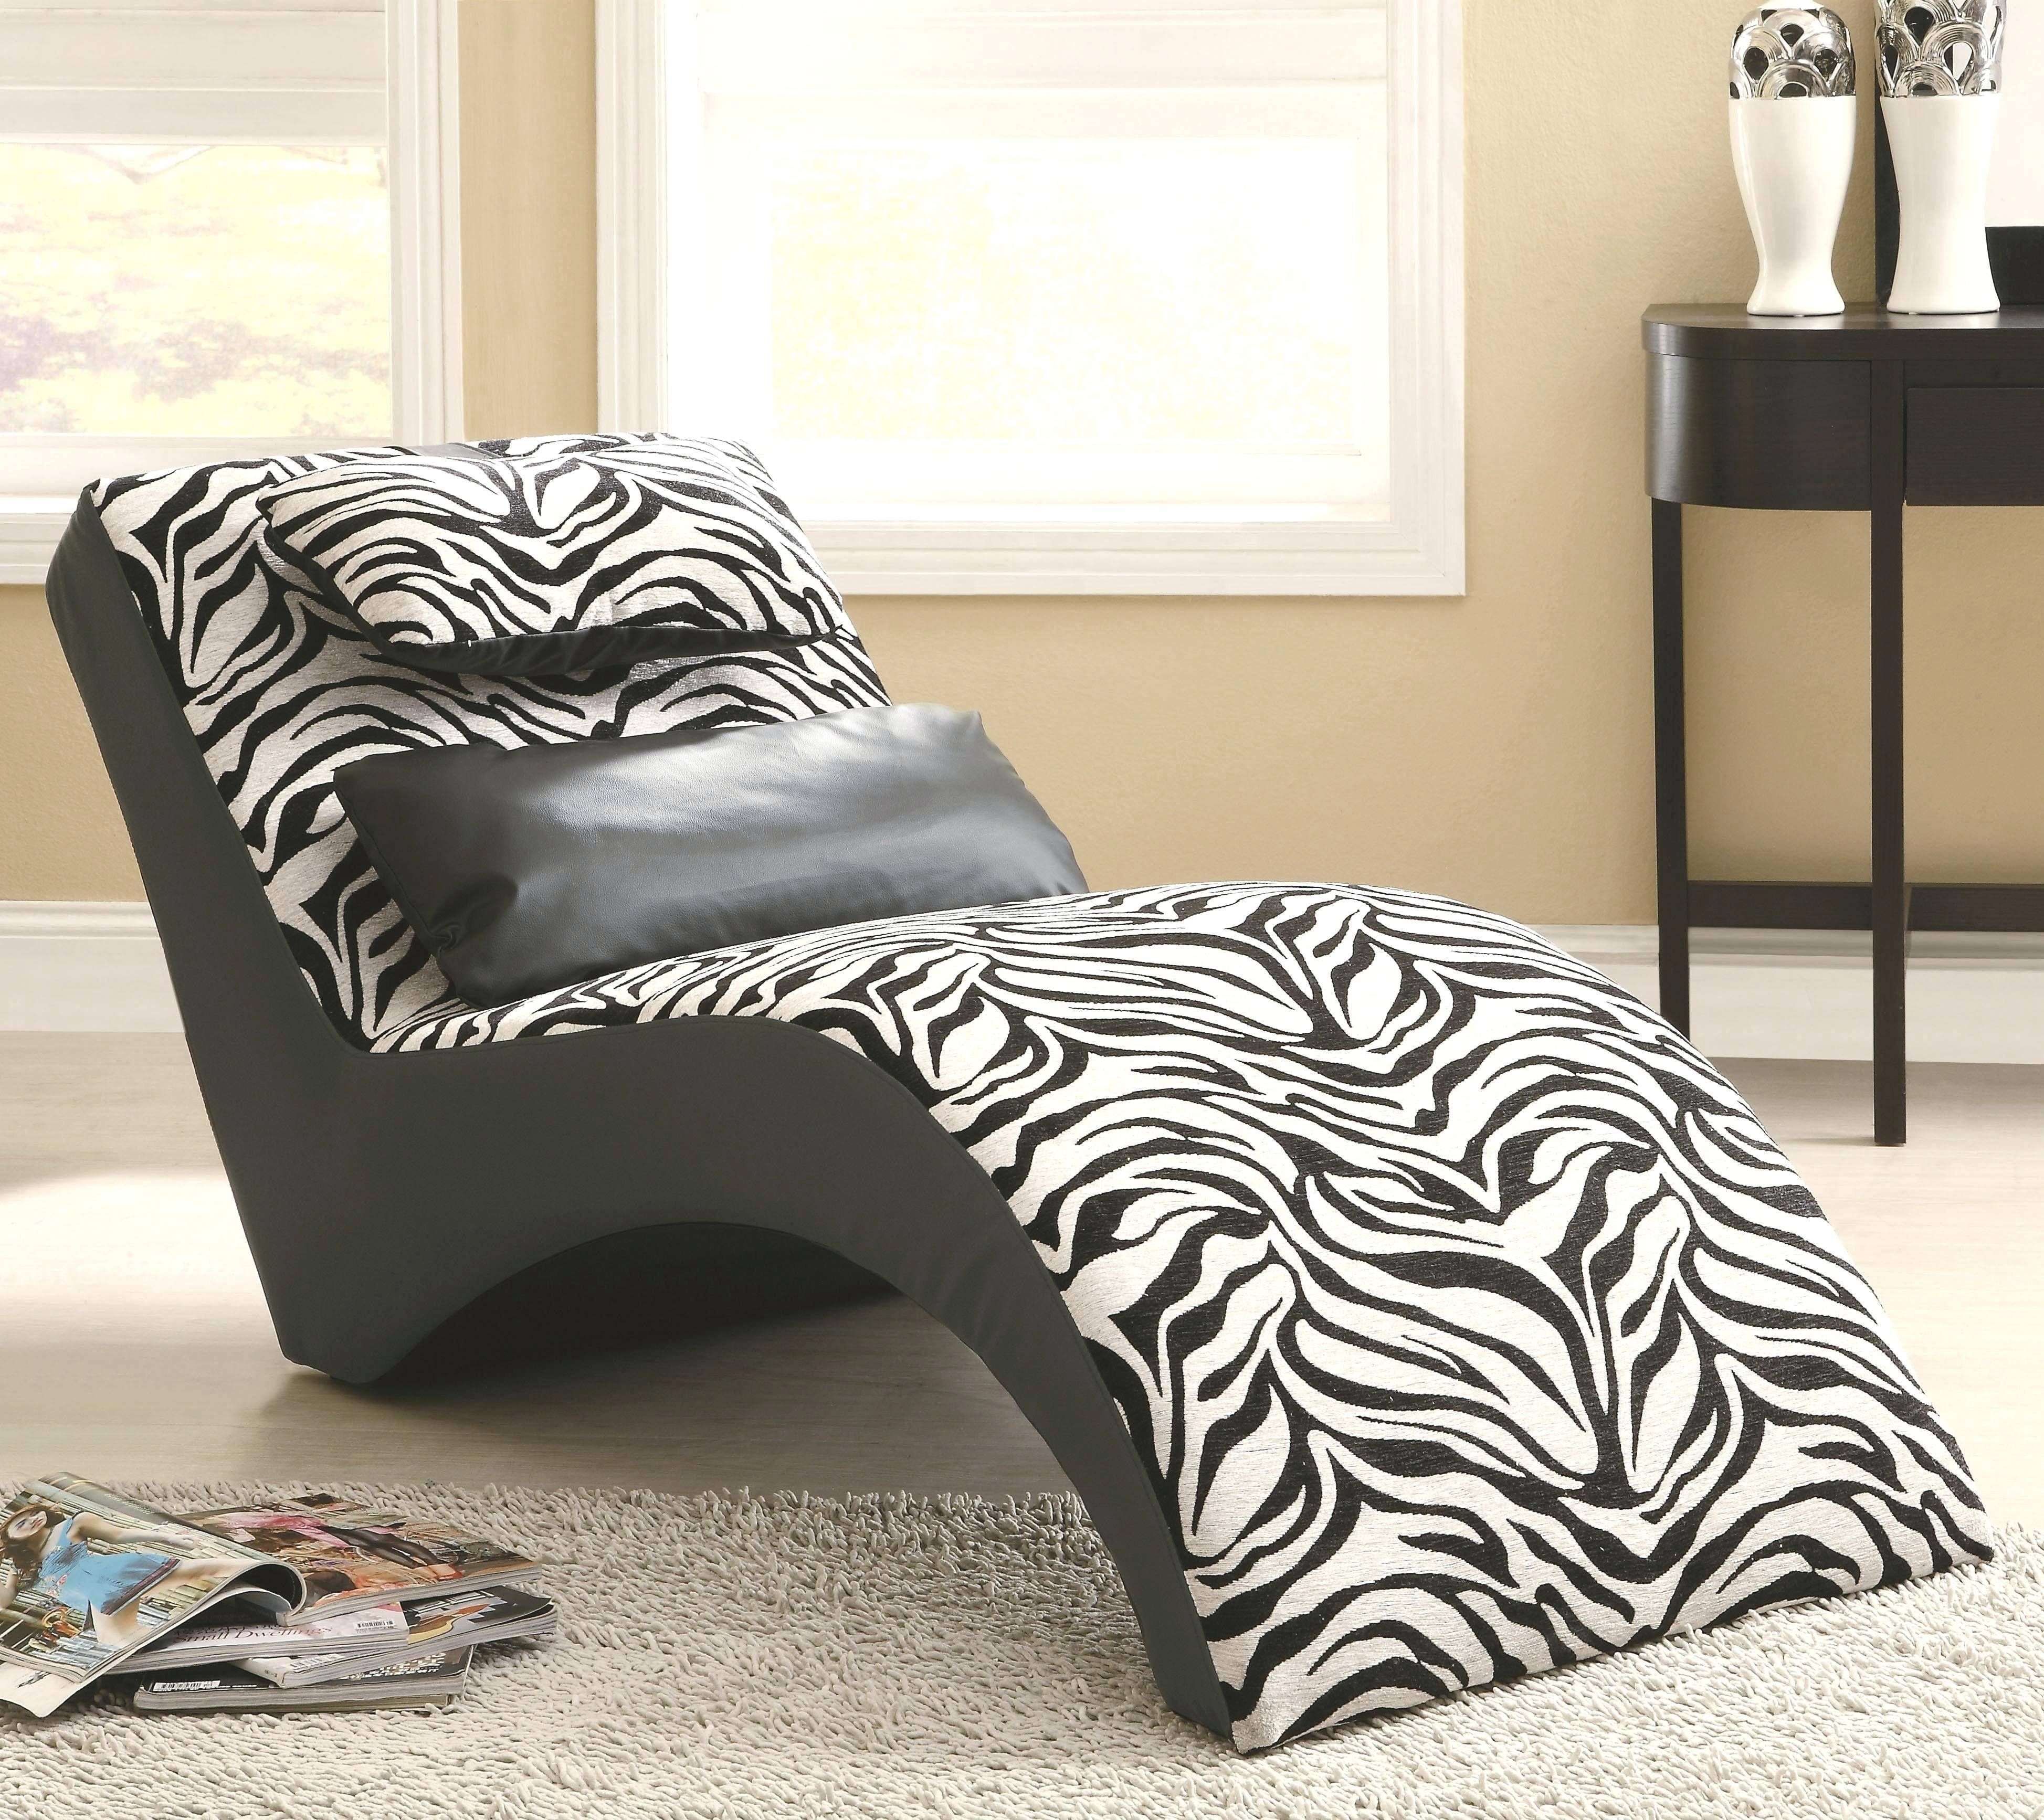 138 Charming Full Size Of Sofas Centeranimal Print Sofa Amazing For Animal Print Sofas (View 12 of 15)